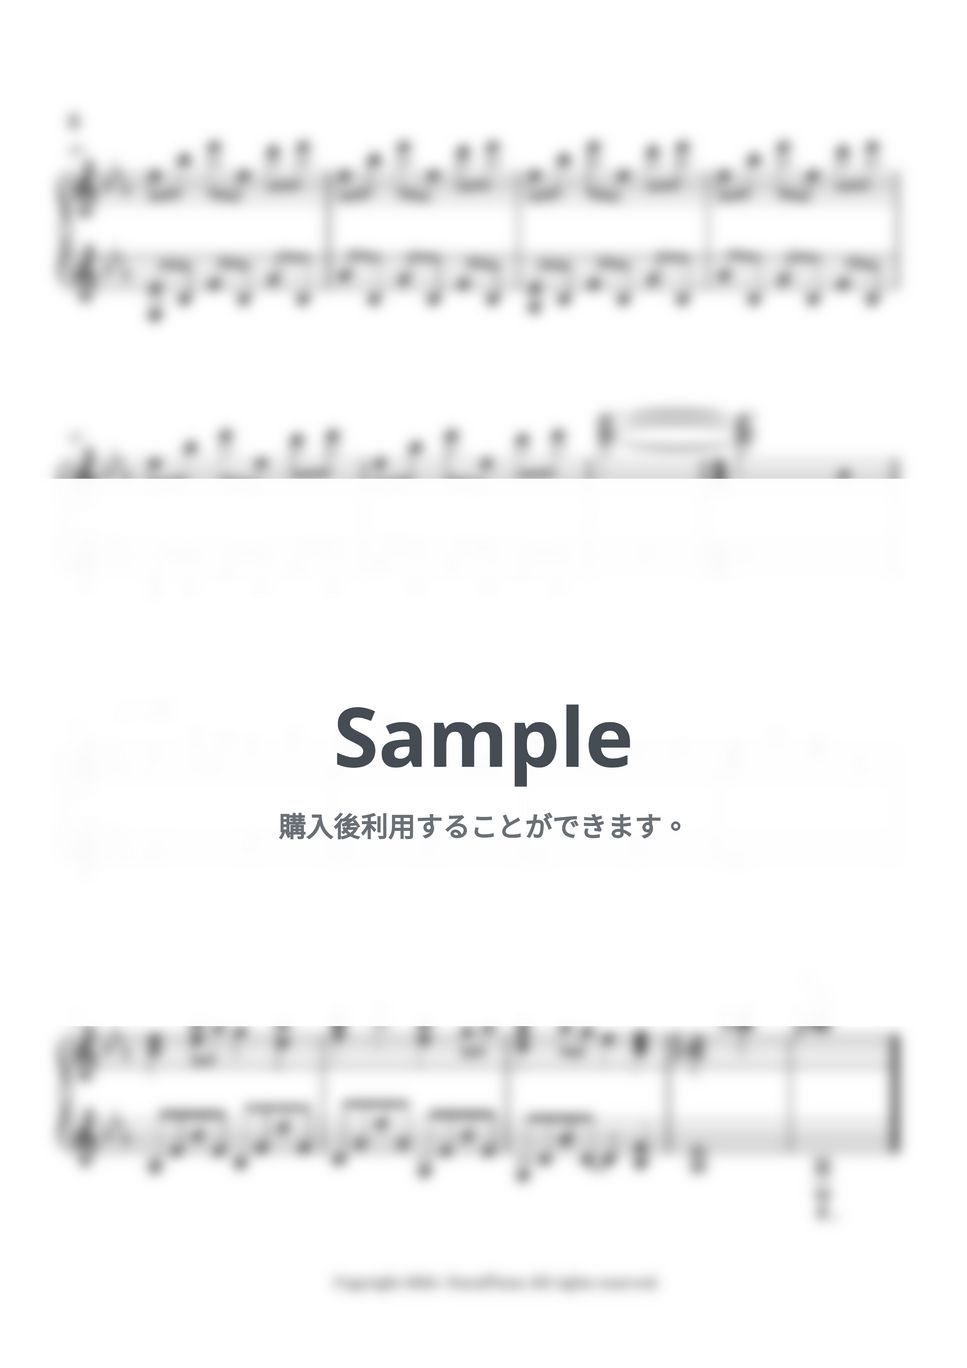 Suguru Matsutani - プロローグ (Prologue) (君の膵臓をたべたい (I Want To Eat Your Pancreas) OST track 3) by 今日ピアノ(Oneul Piano)